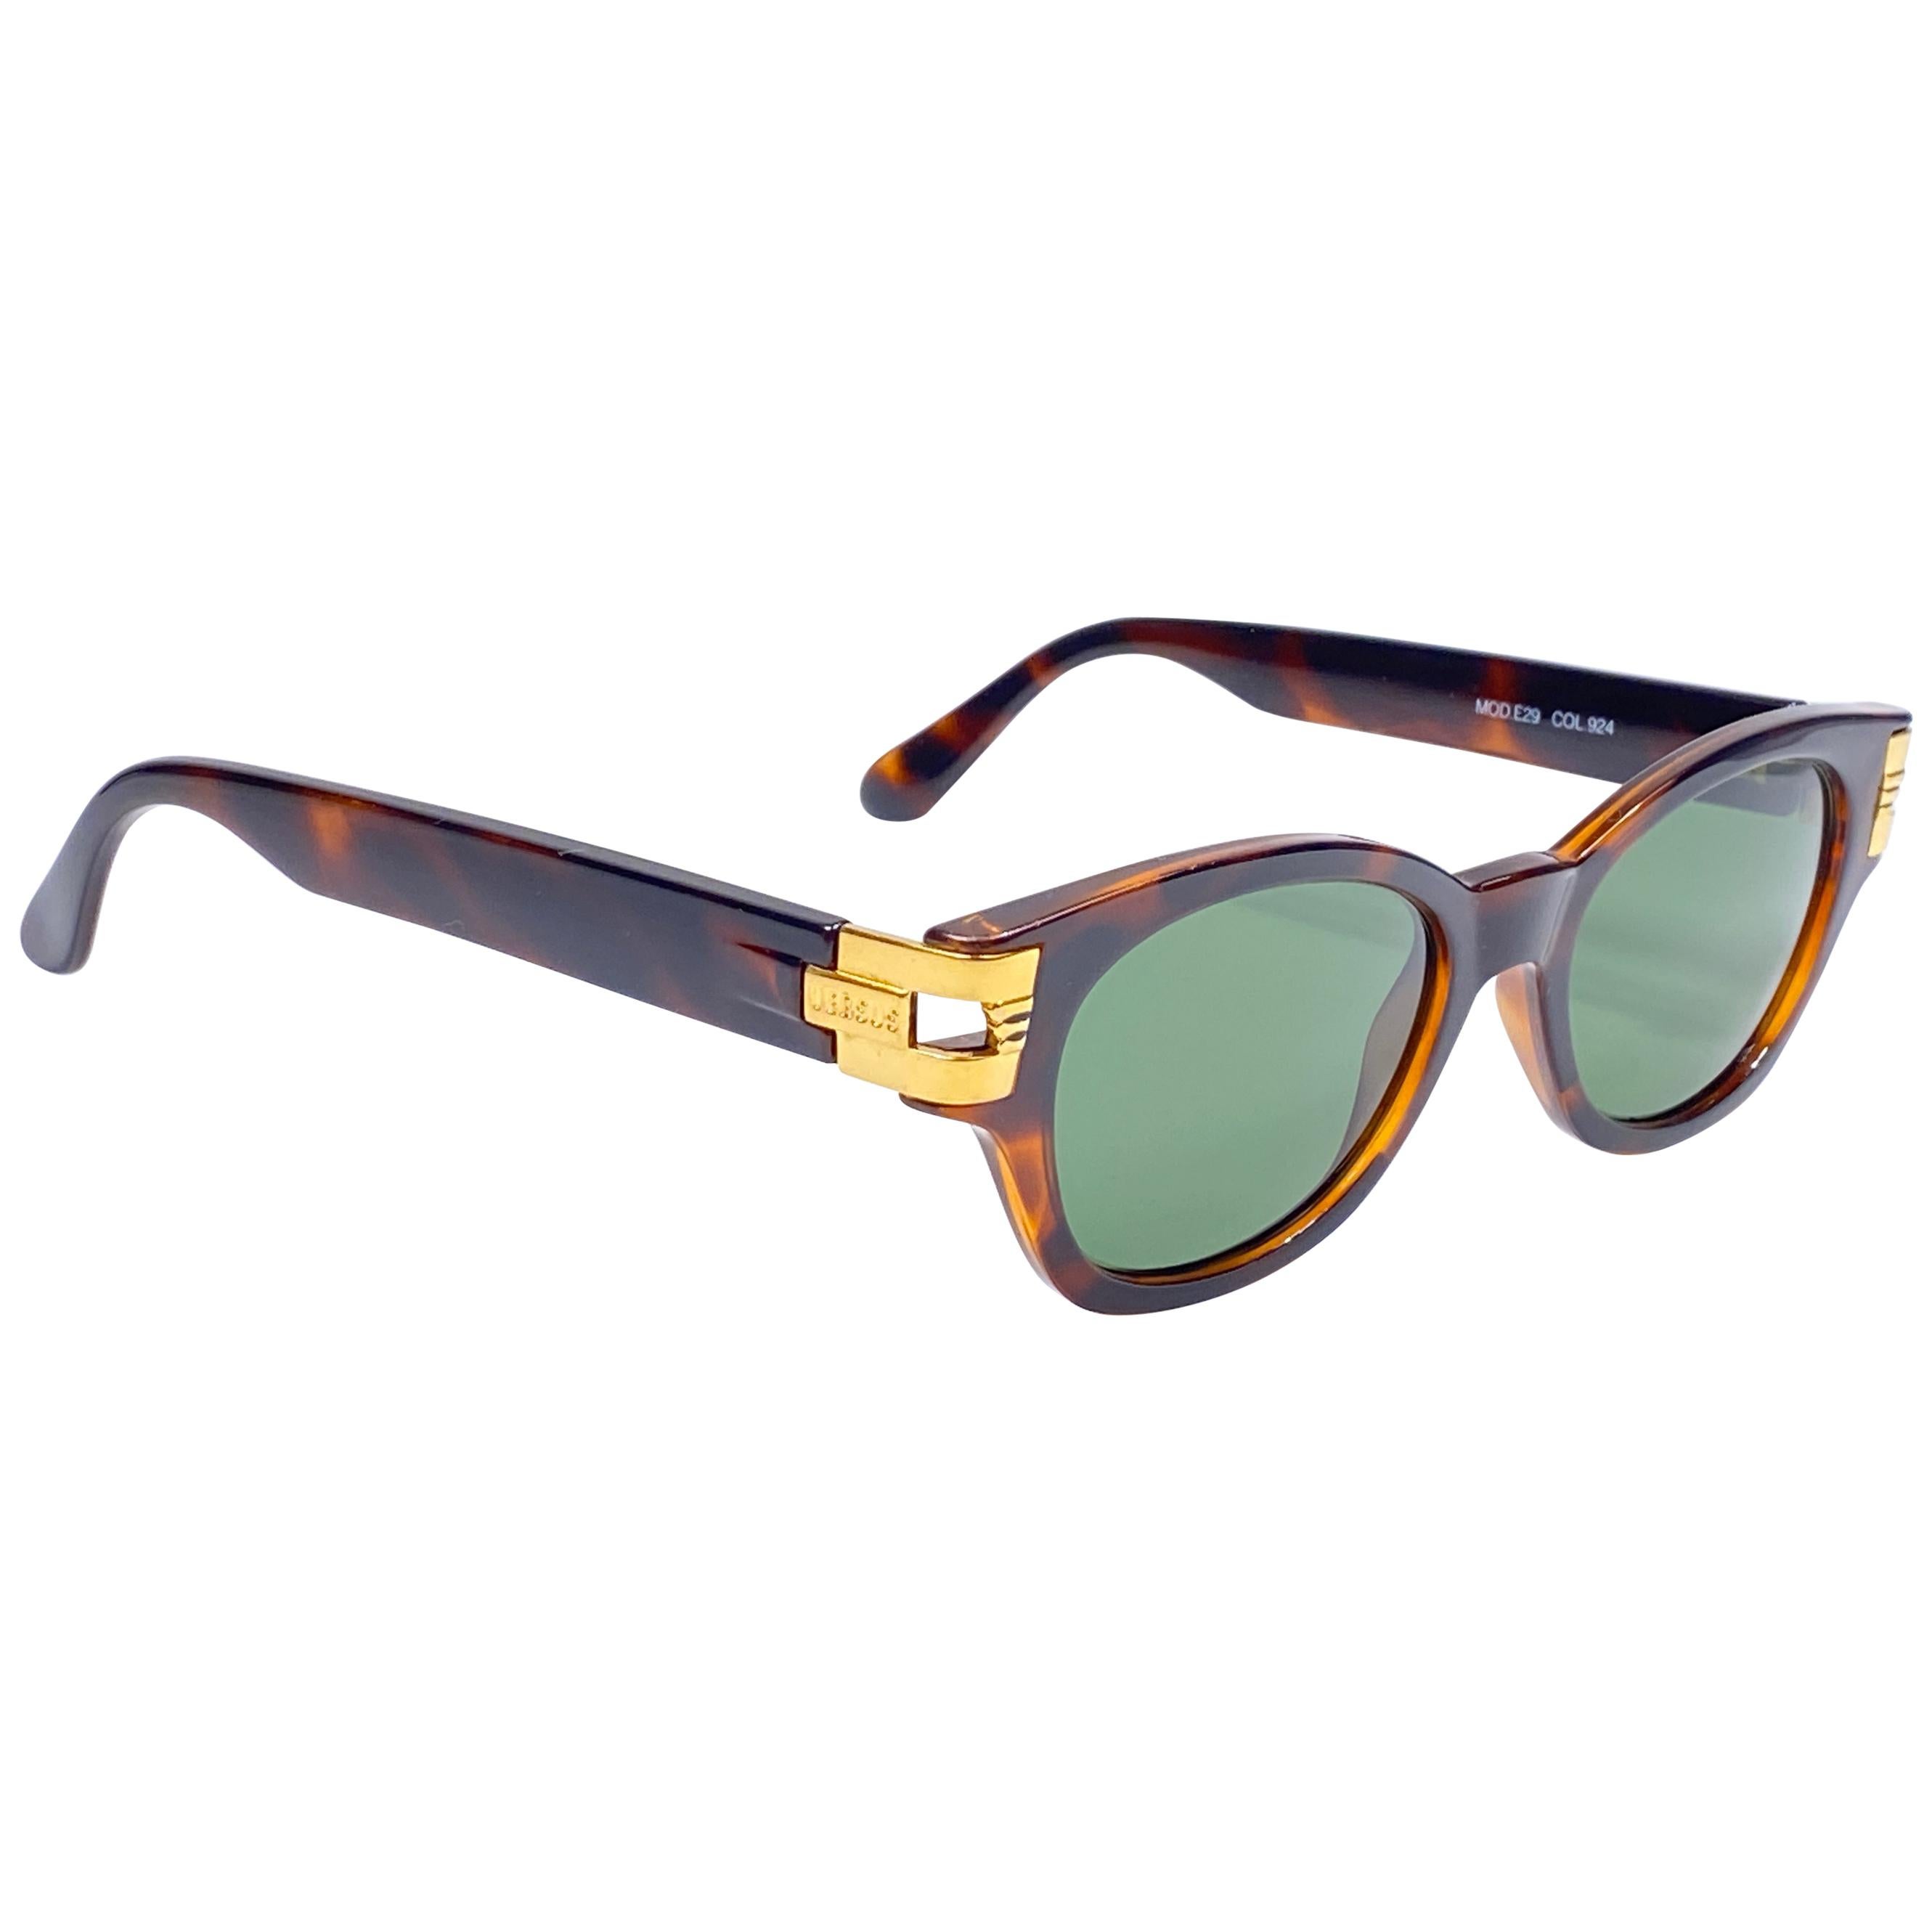  Vintage Gianni Versace Versus Wayfarer Style Sunglasses 1990's Made in Italy